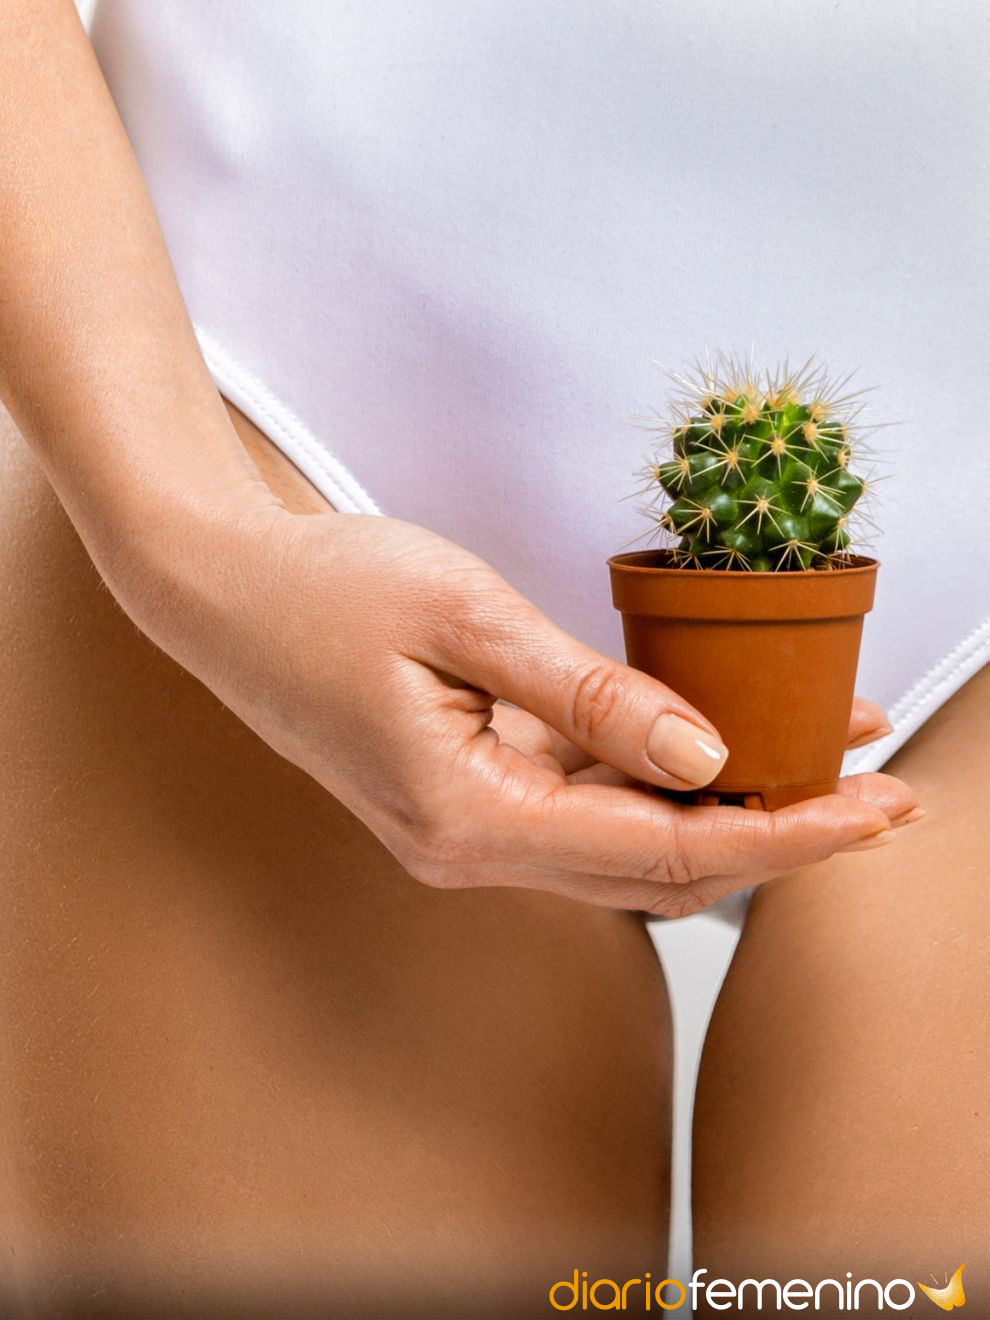 Higiene íntima femenina: no te laves la vagina interiormente